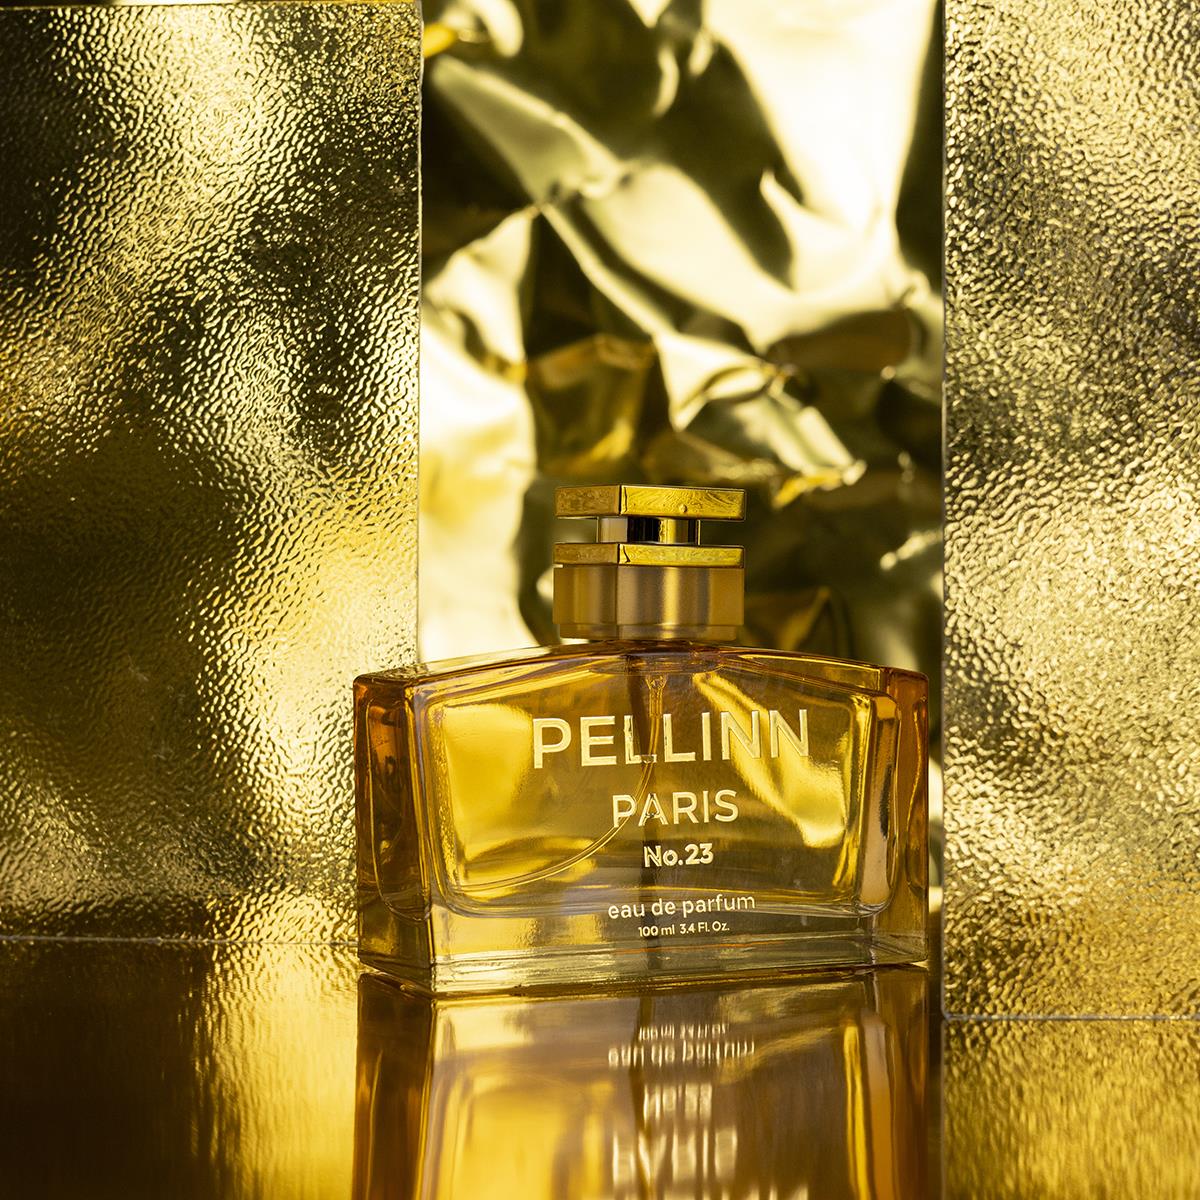 Pellinn Paris No.23 Oryantal ve Turunçgil Kadın EDP Parfüm100 ml  Pellinn Paris Parfüm